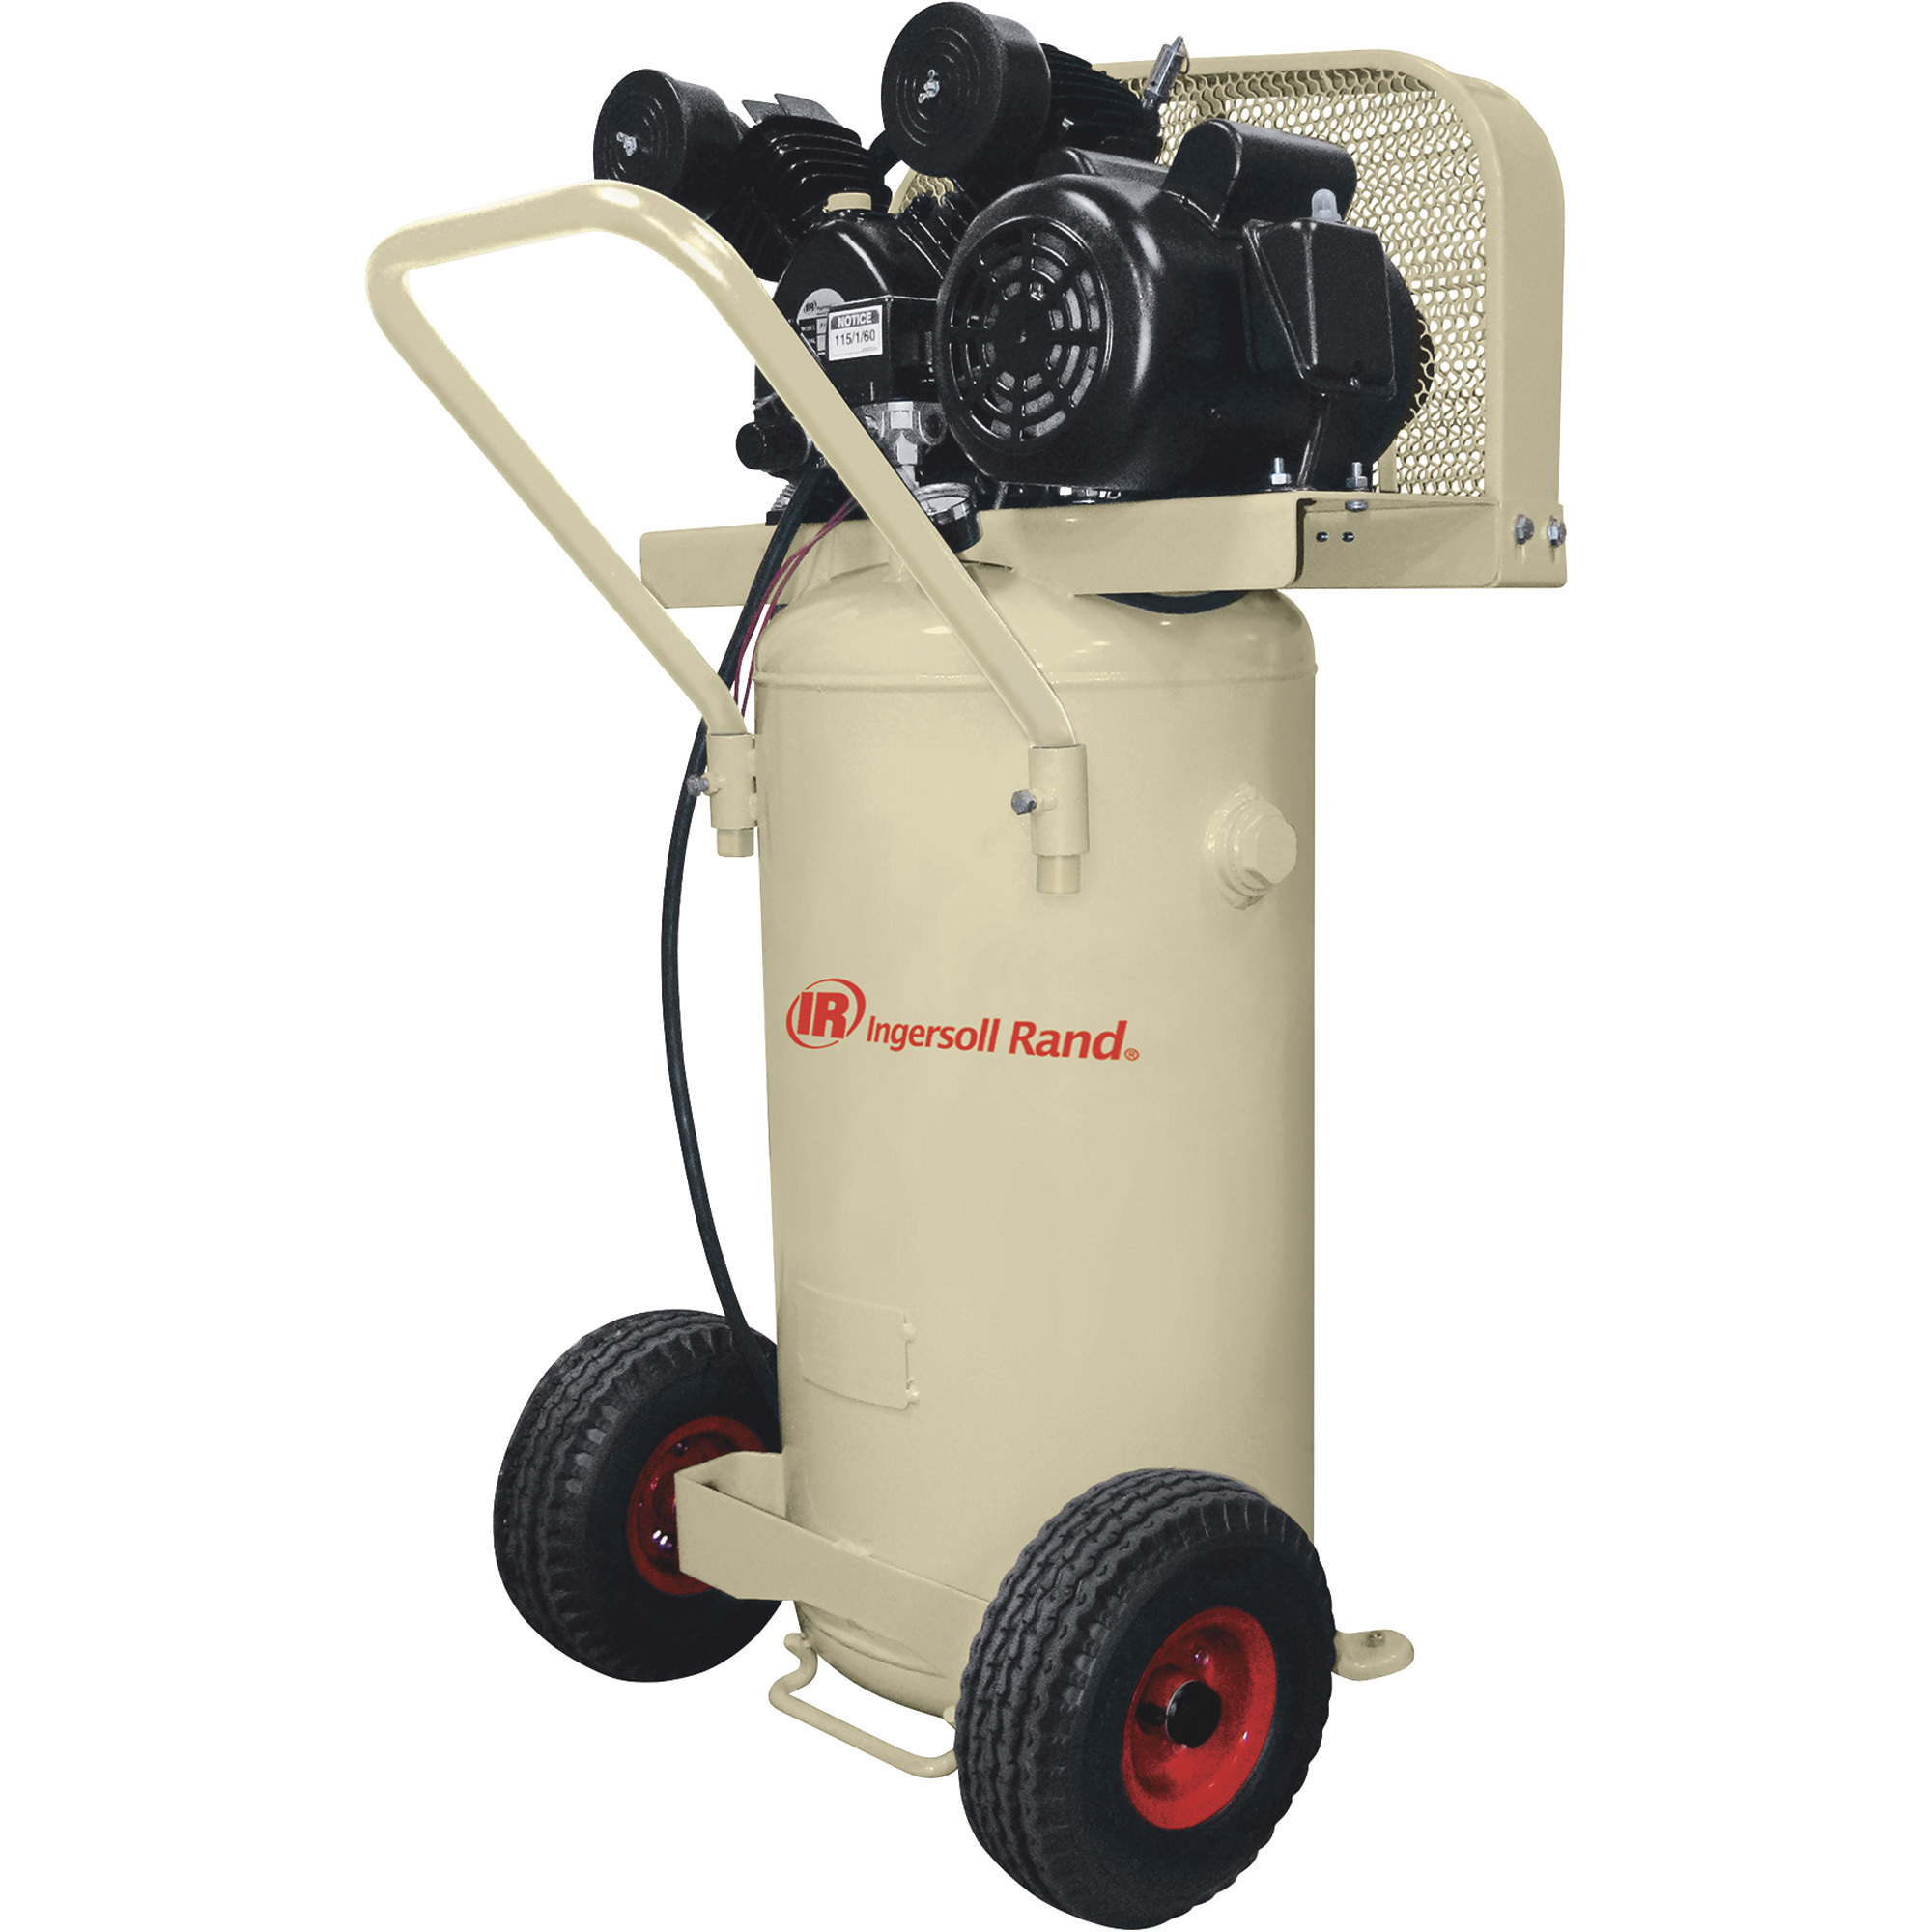 Ingersoll Rand Garage Mate 2 HP, 20-Gallon Vertical, 5.5 CFM Portable Electric Air Compressor - Model# P1.5IU-A9 -  42663401